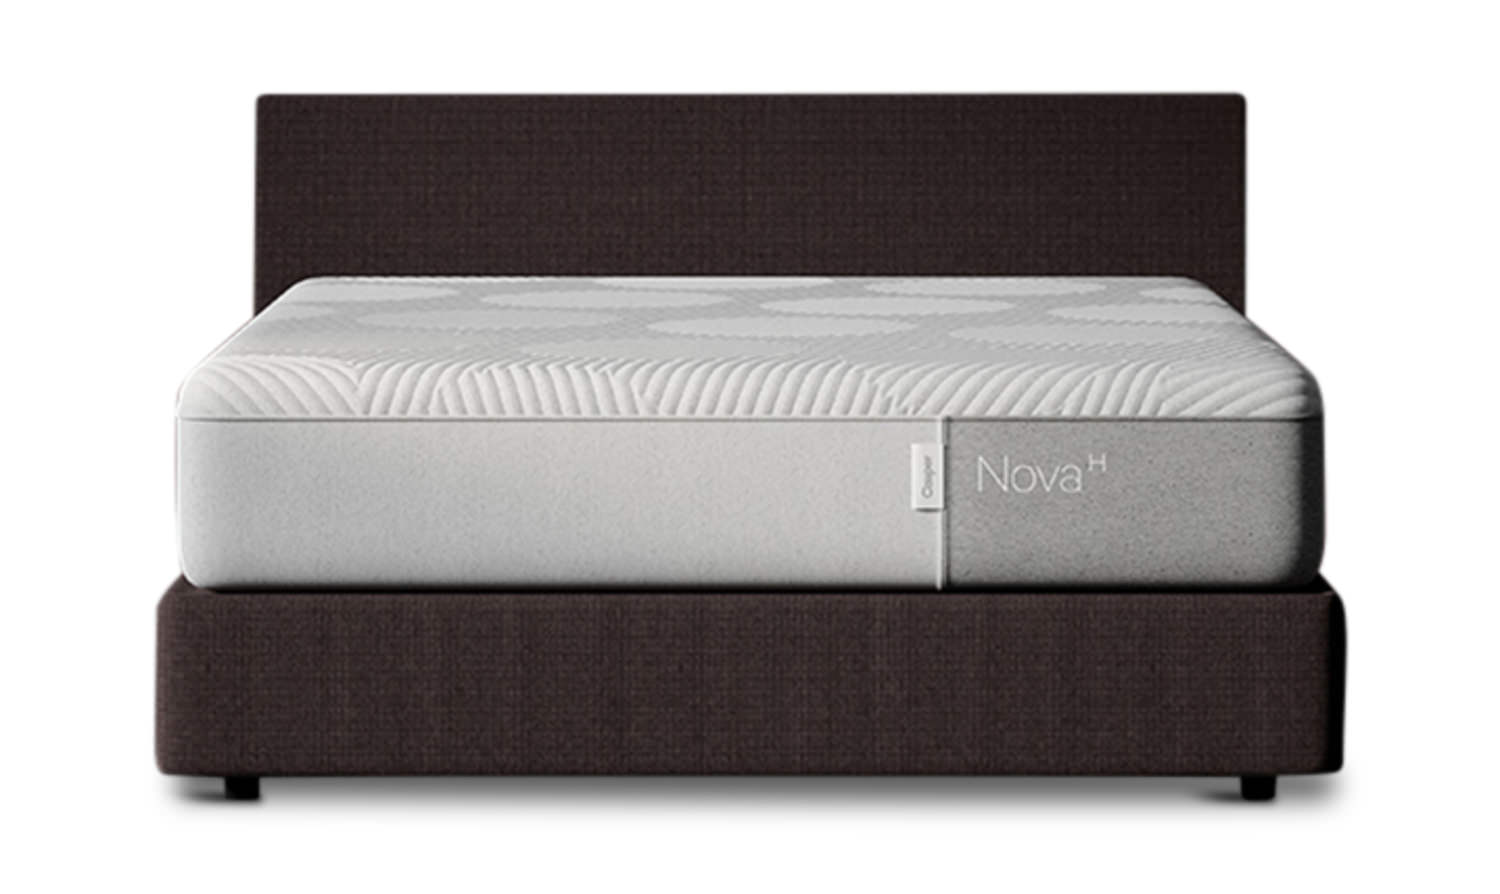 nova plus air mattress instructions